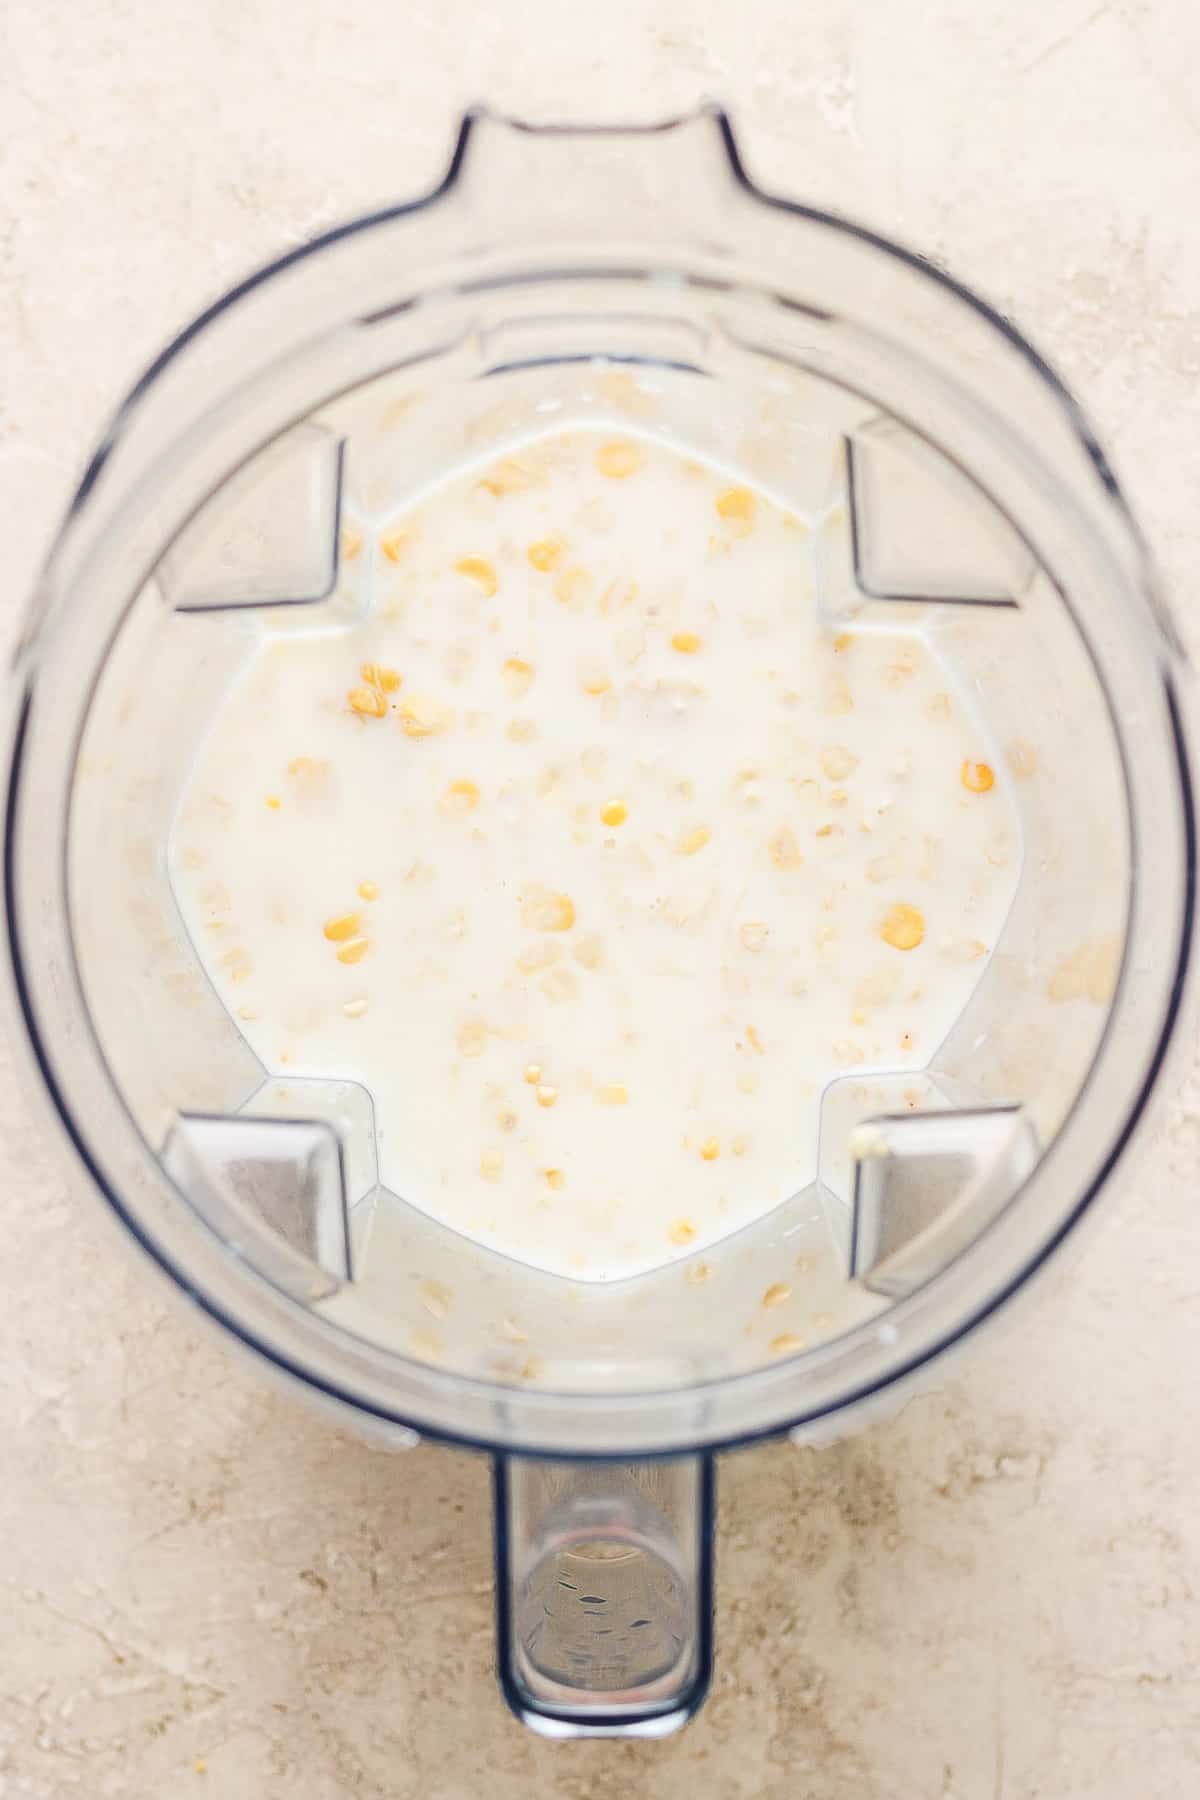 Milk and corn cut off the cob in a blender.